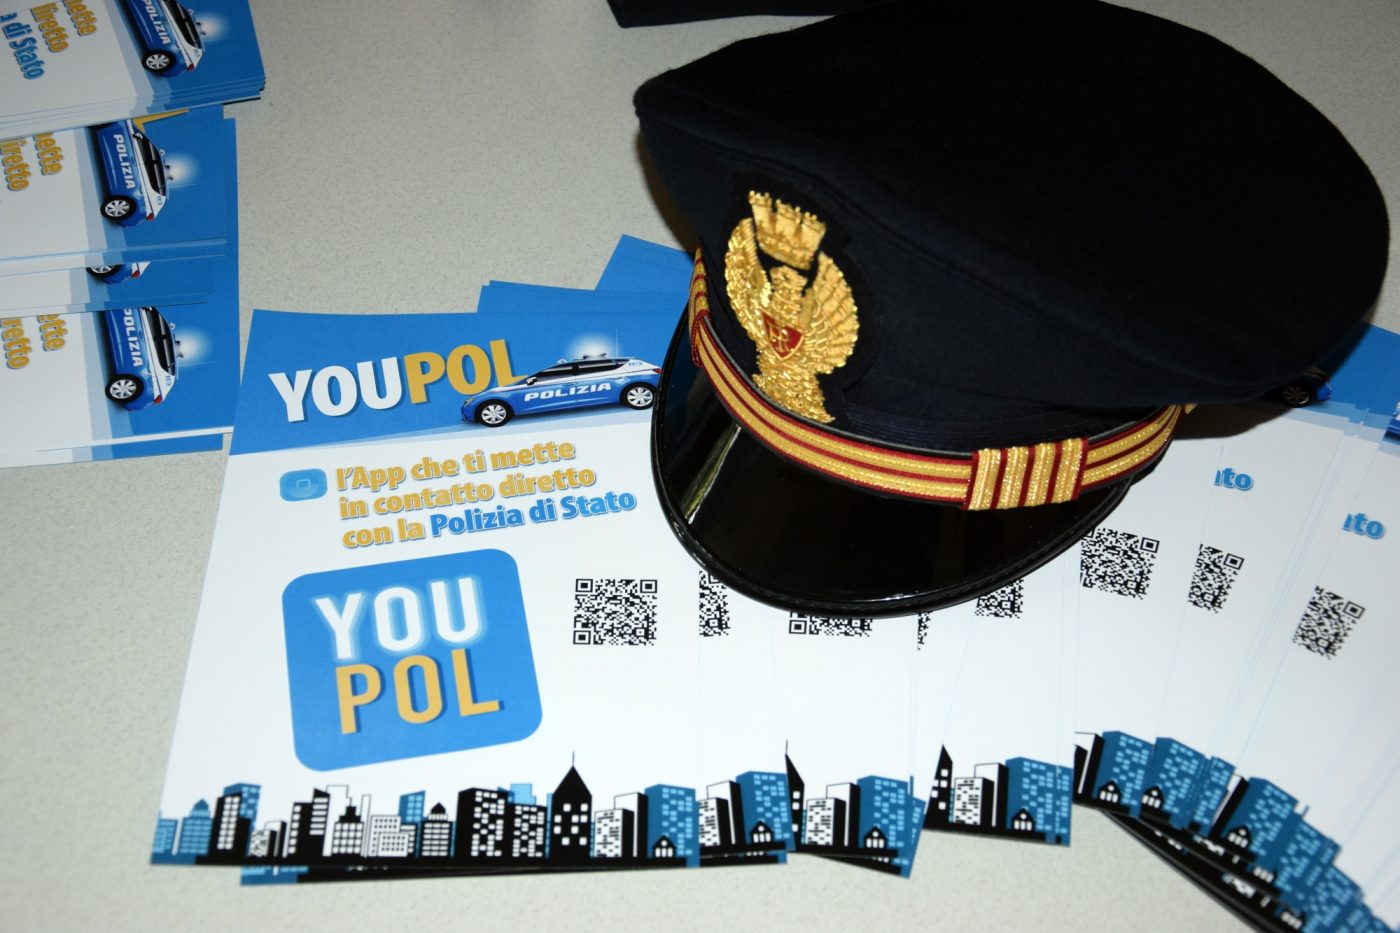 Incontri polizia postale cyberbullismo